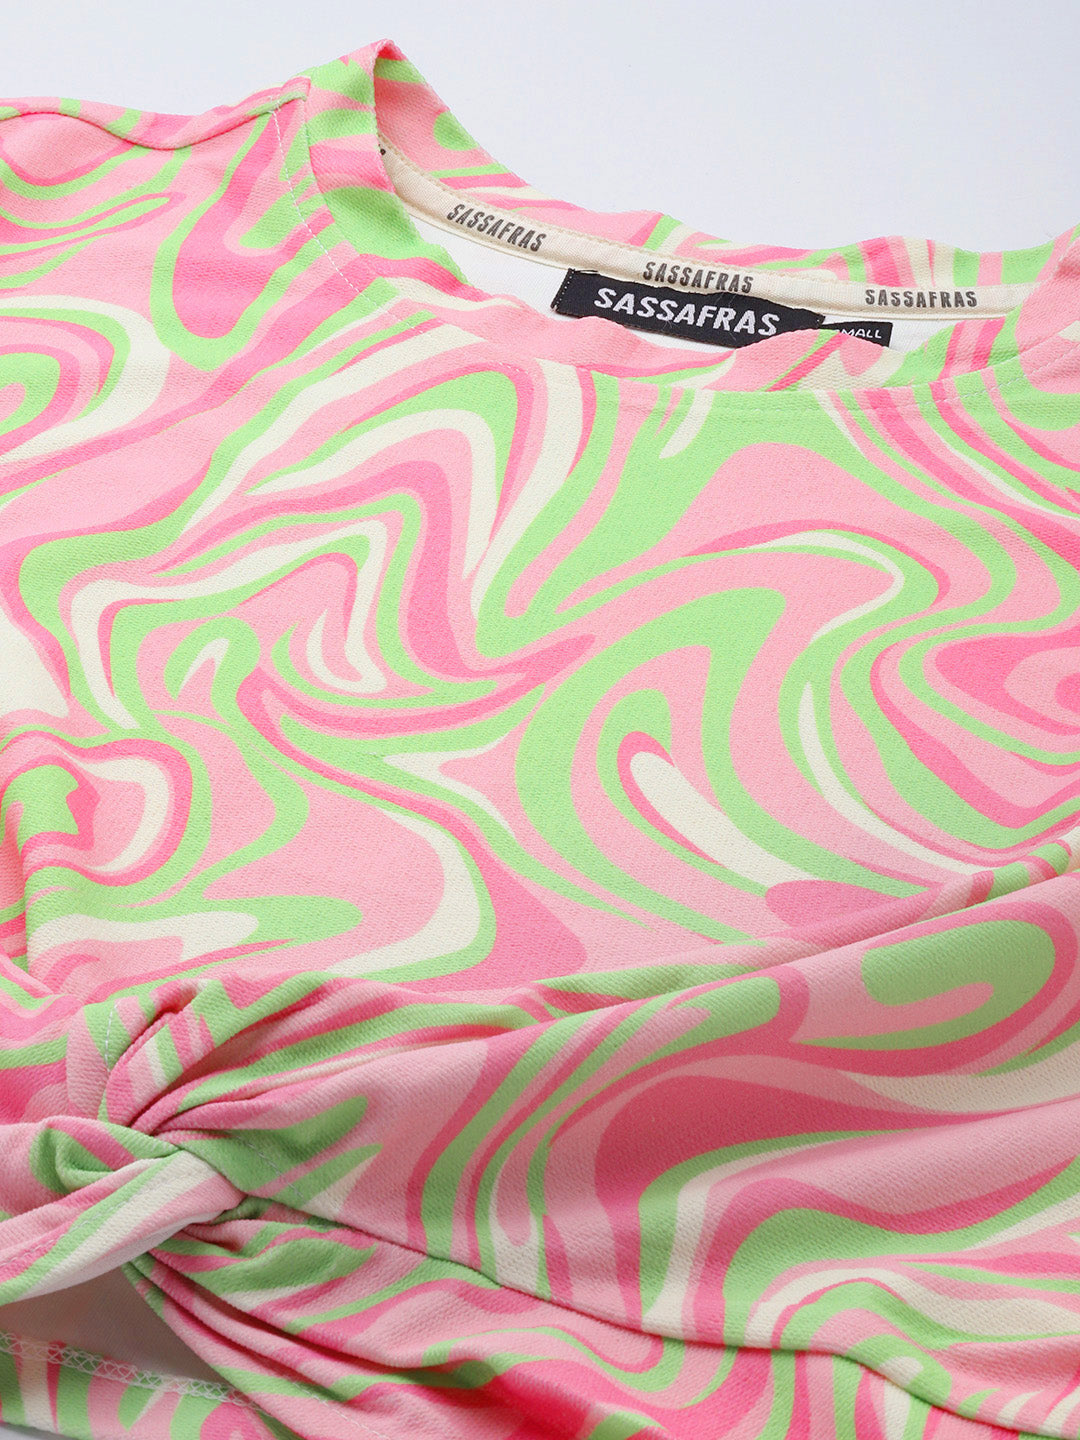 Women Pink & Green Waves Print Knot Crop Sweatshirt